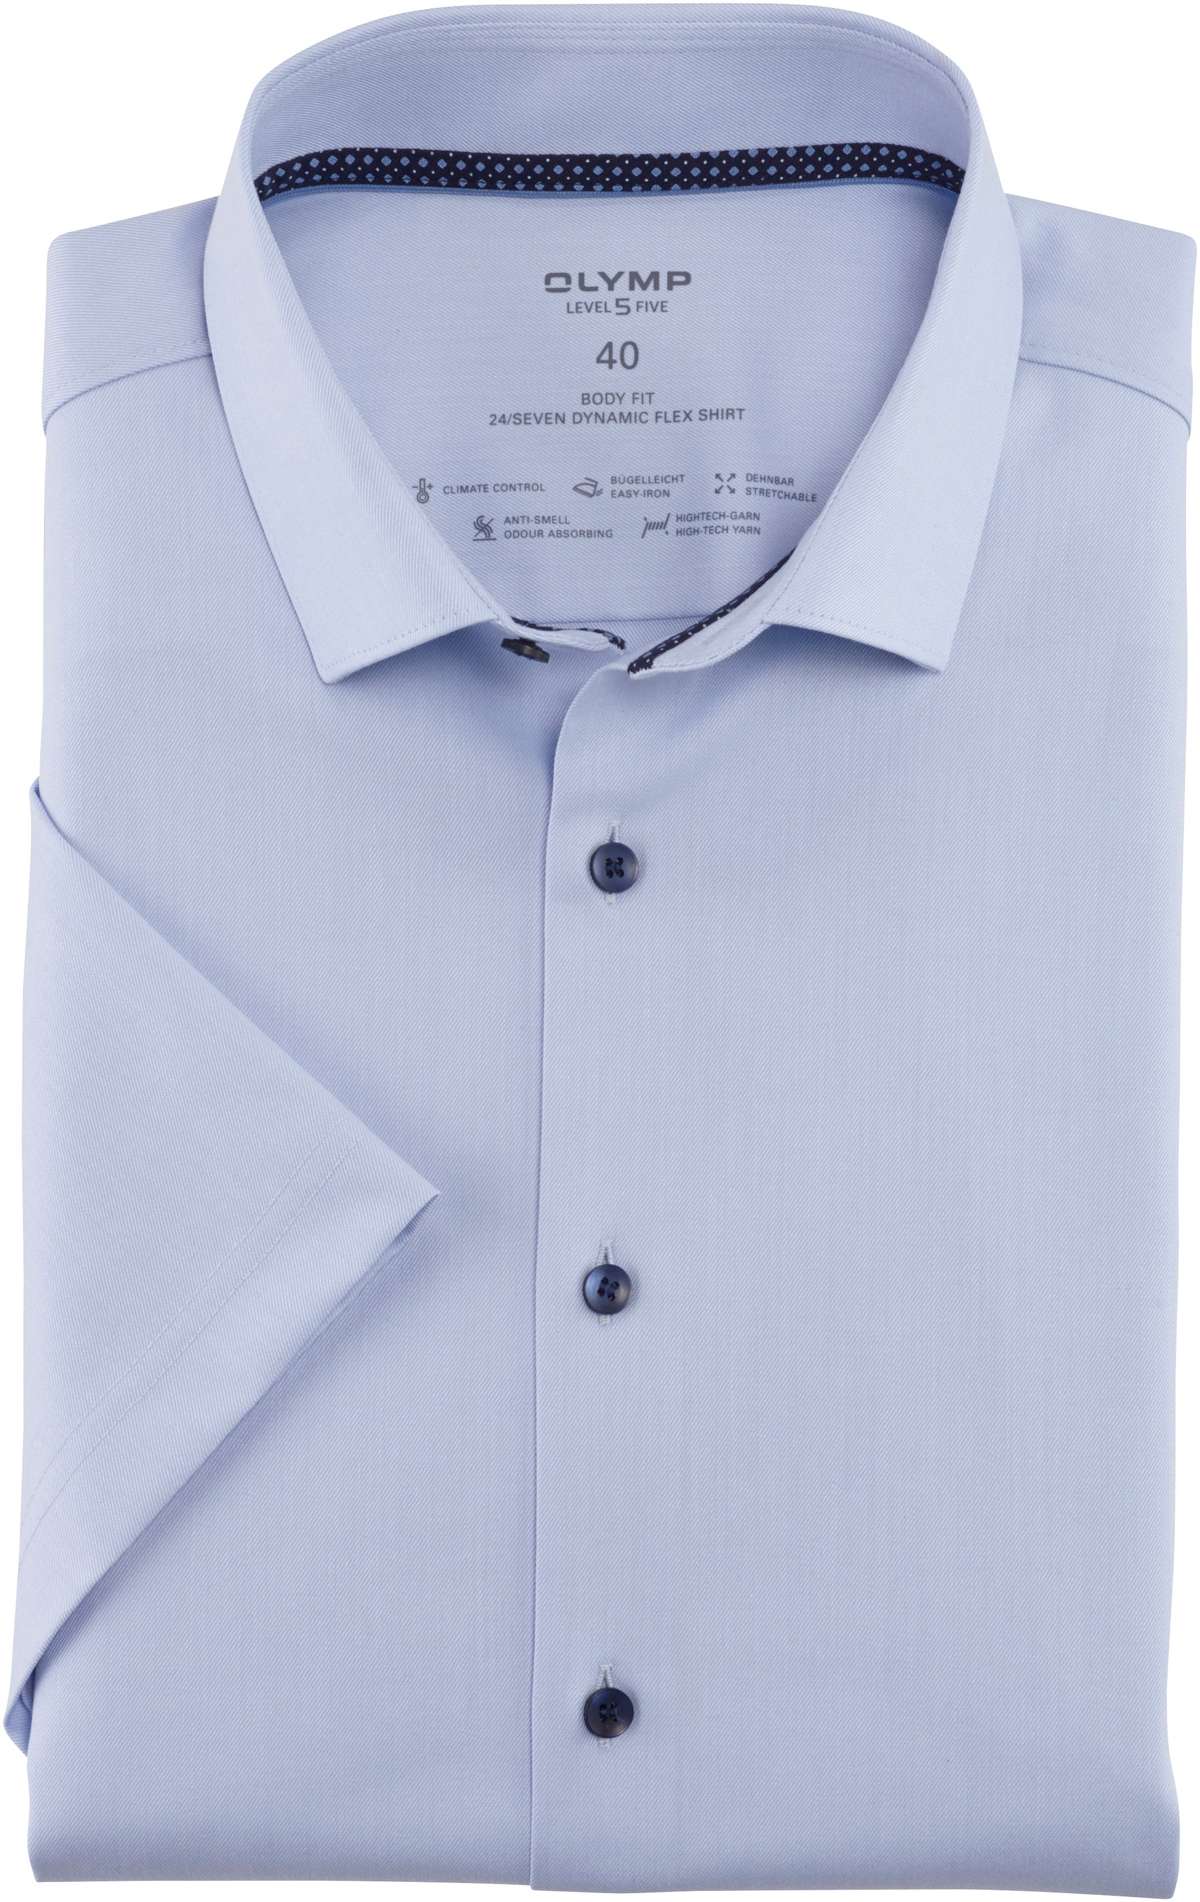 Рубашка с короткими рукавами, качество 24/7 Dynamic Flex.